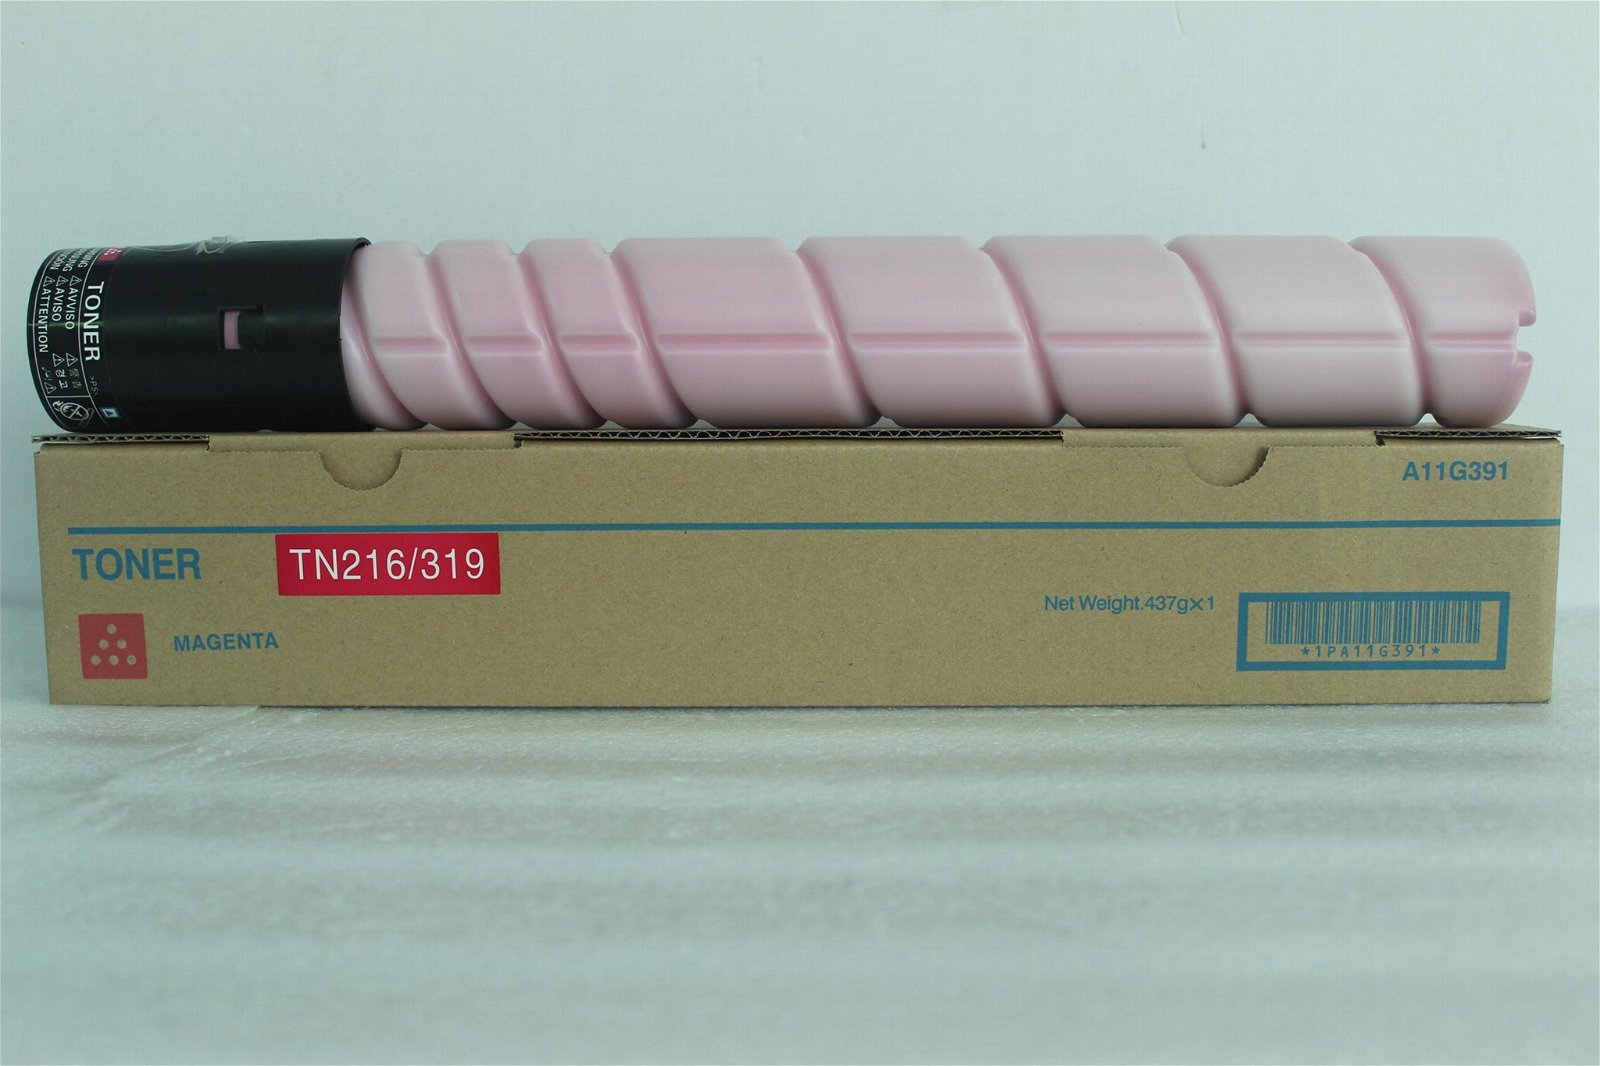 TN321 Copier Toner Cartridge 2